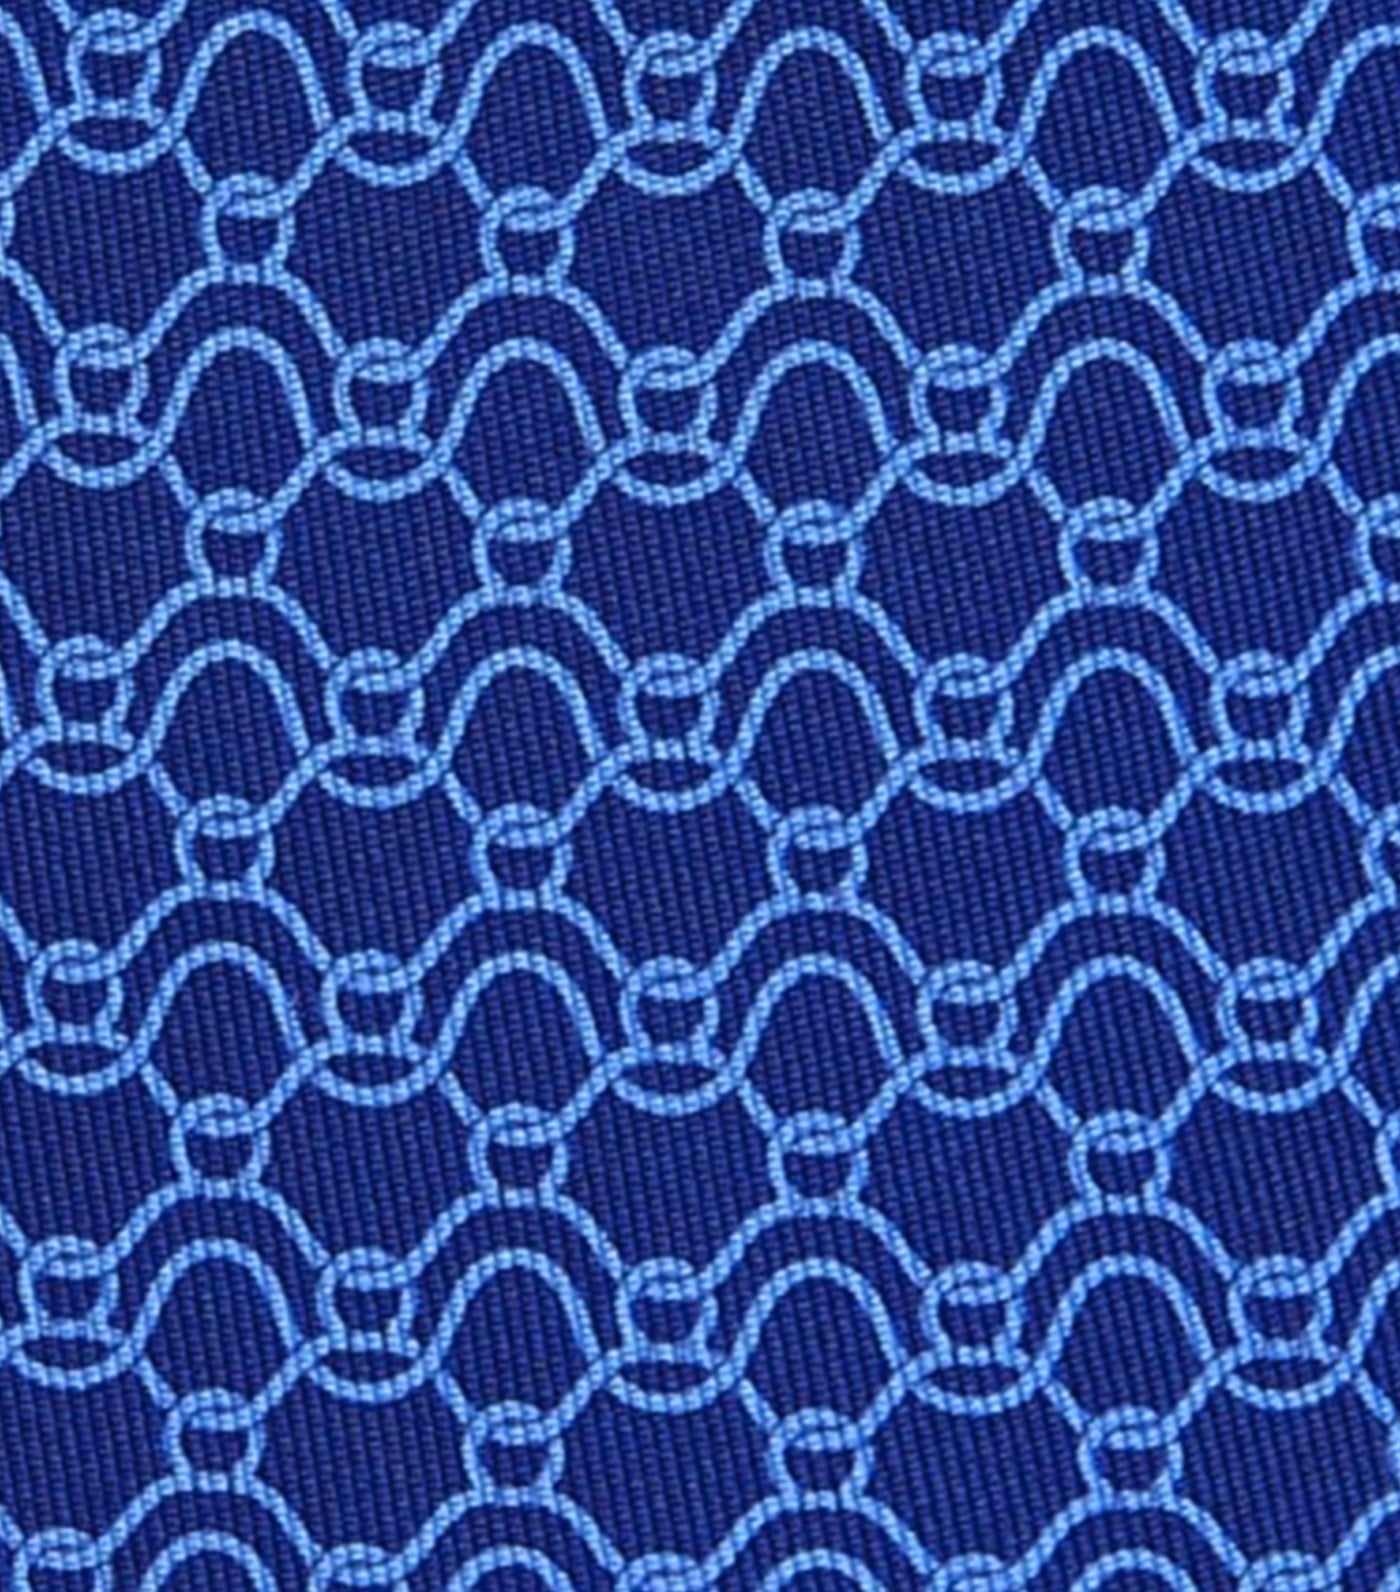 Wave Print Tie Navy Blue/Light Blue